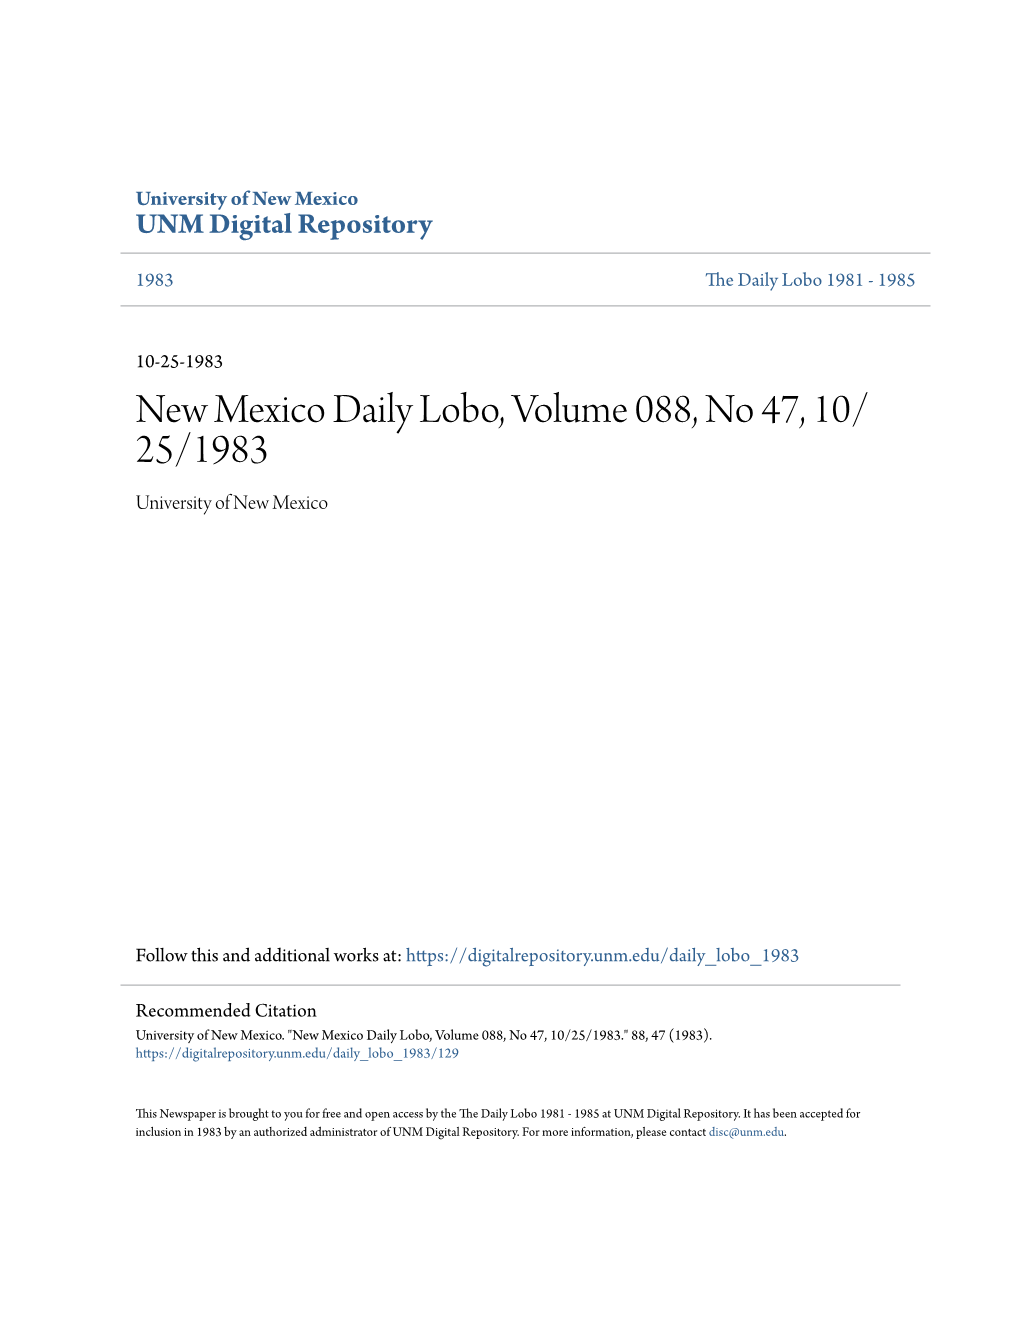 New Mexico Daily Lobo, Volume 088, No 47, 10/25/1983." 88, 47 (1983)